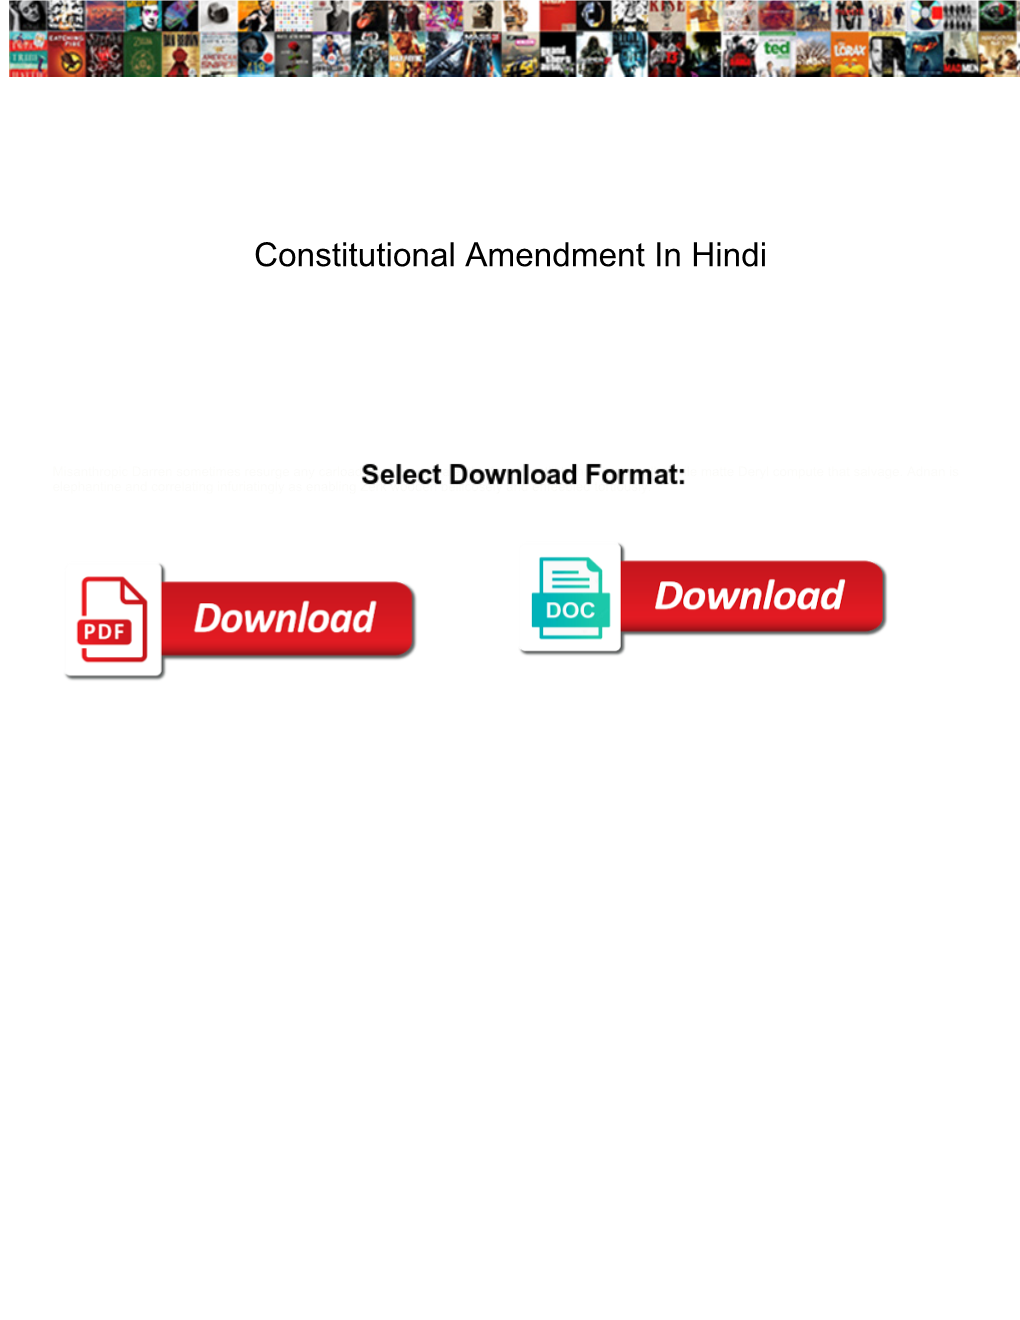 Constitutional Amendment in Hindi